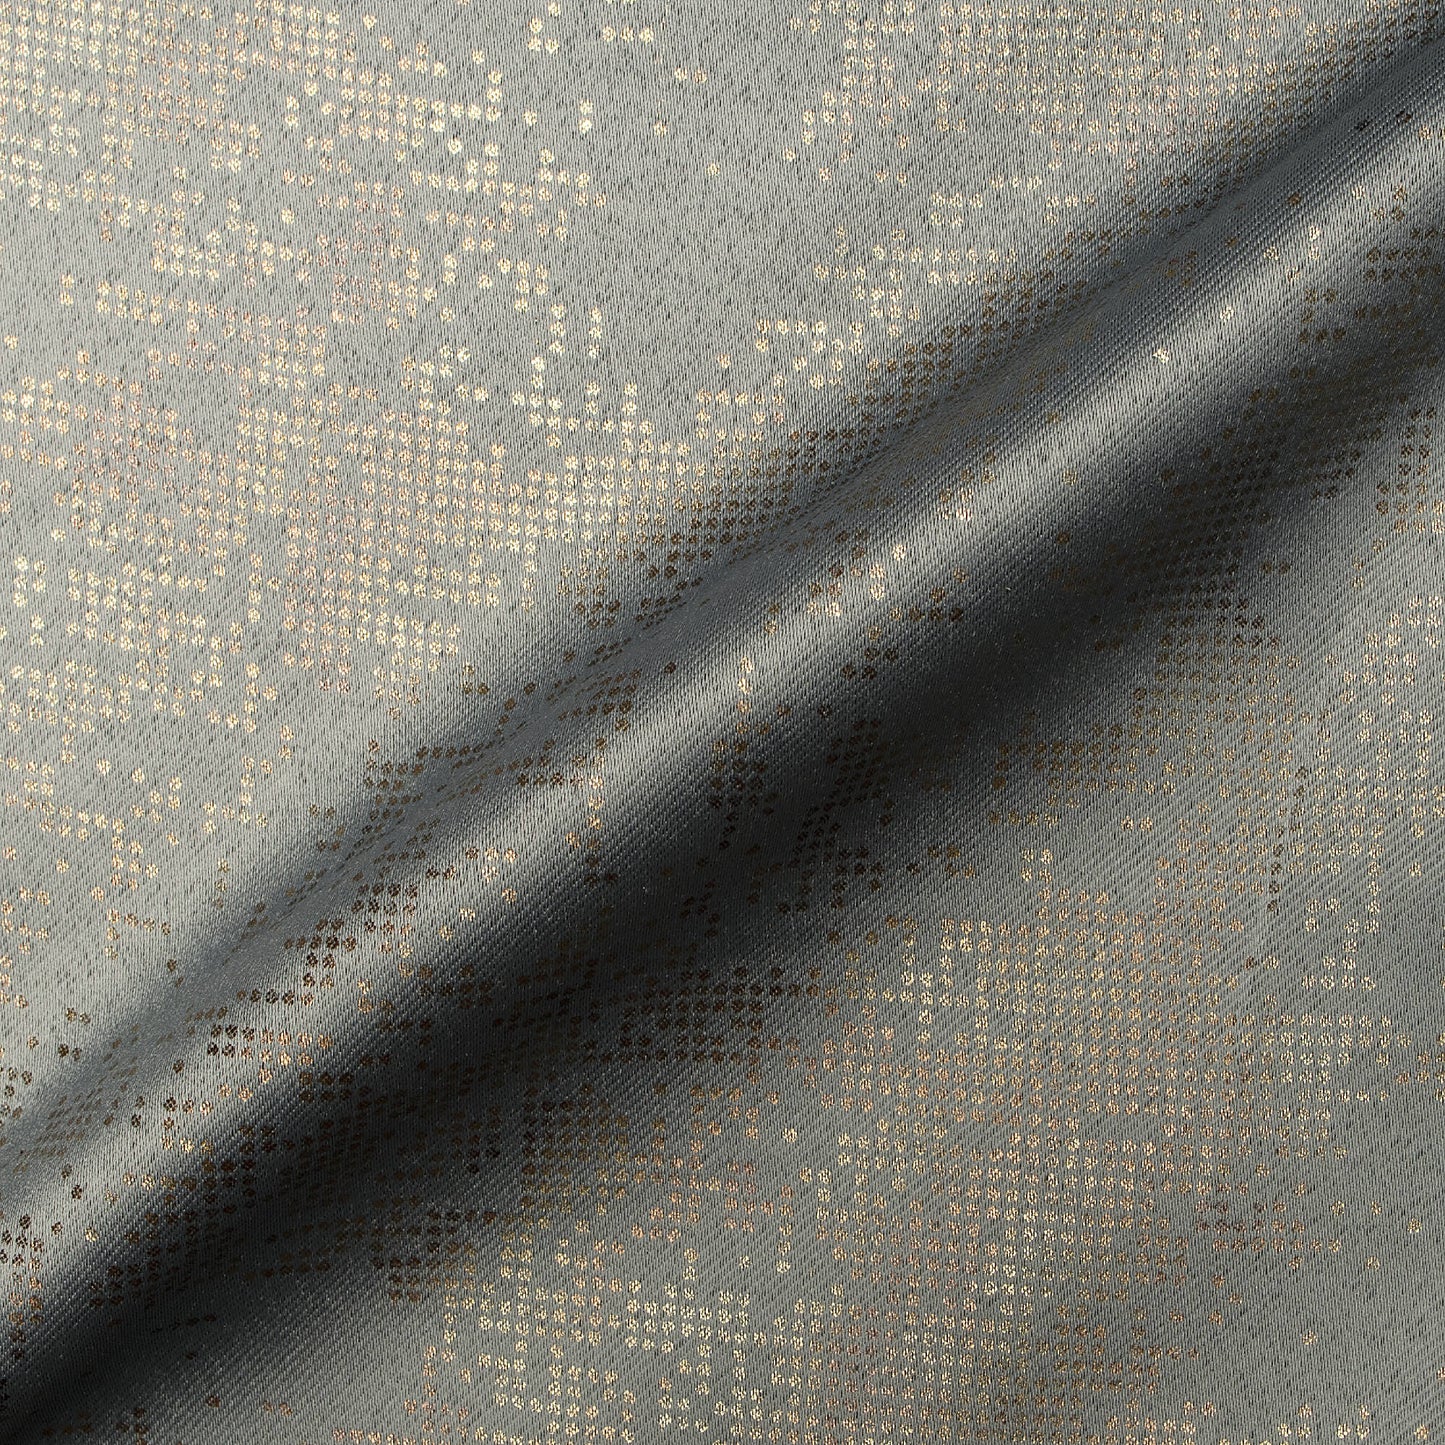 Lead Grey Golden Dots Geometric Pattern Premium Curtain Fabric (Width 54 Inches)